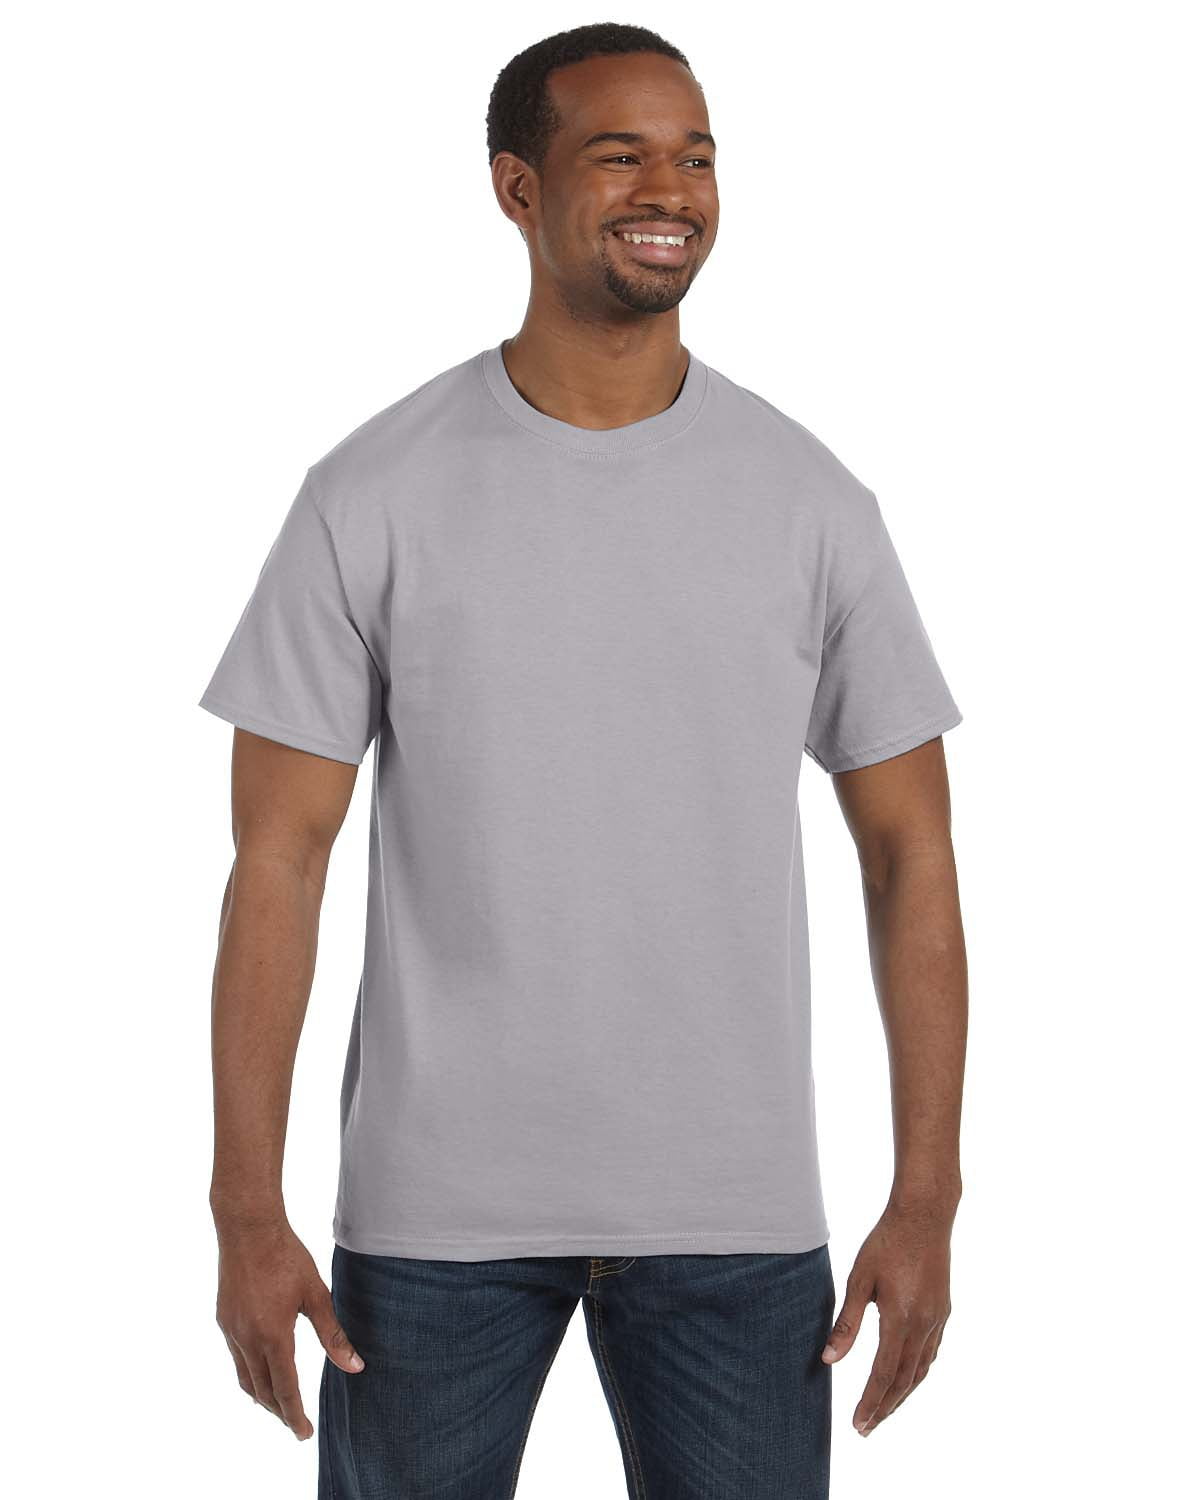 Hanes Men's 6.1 Tagless T-Shirt - 5250T -